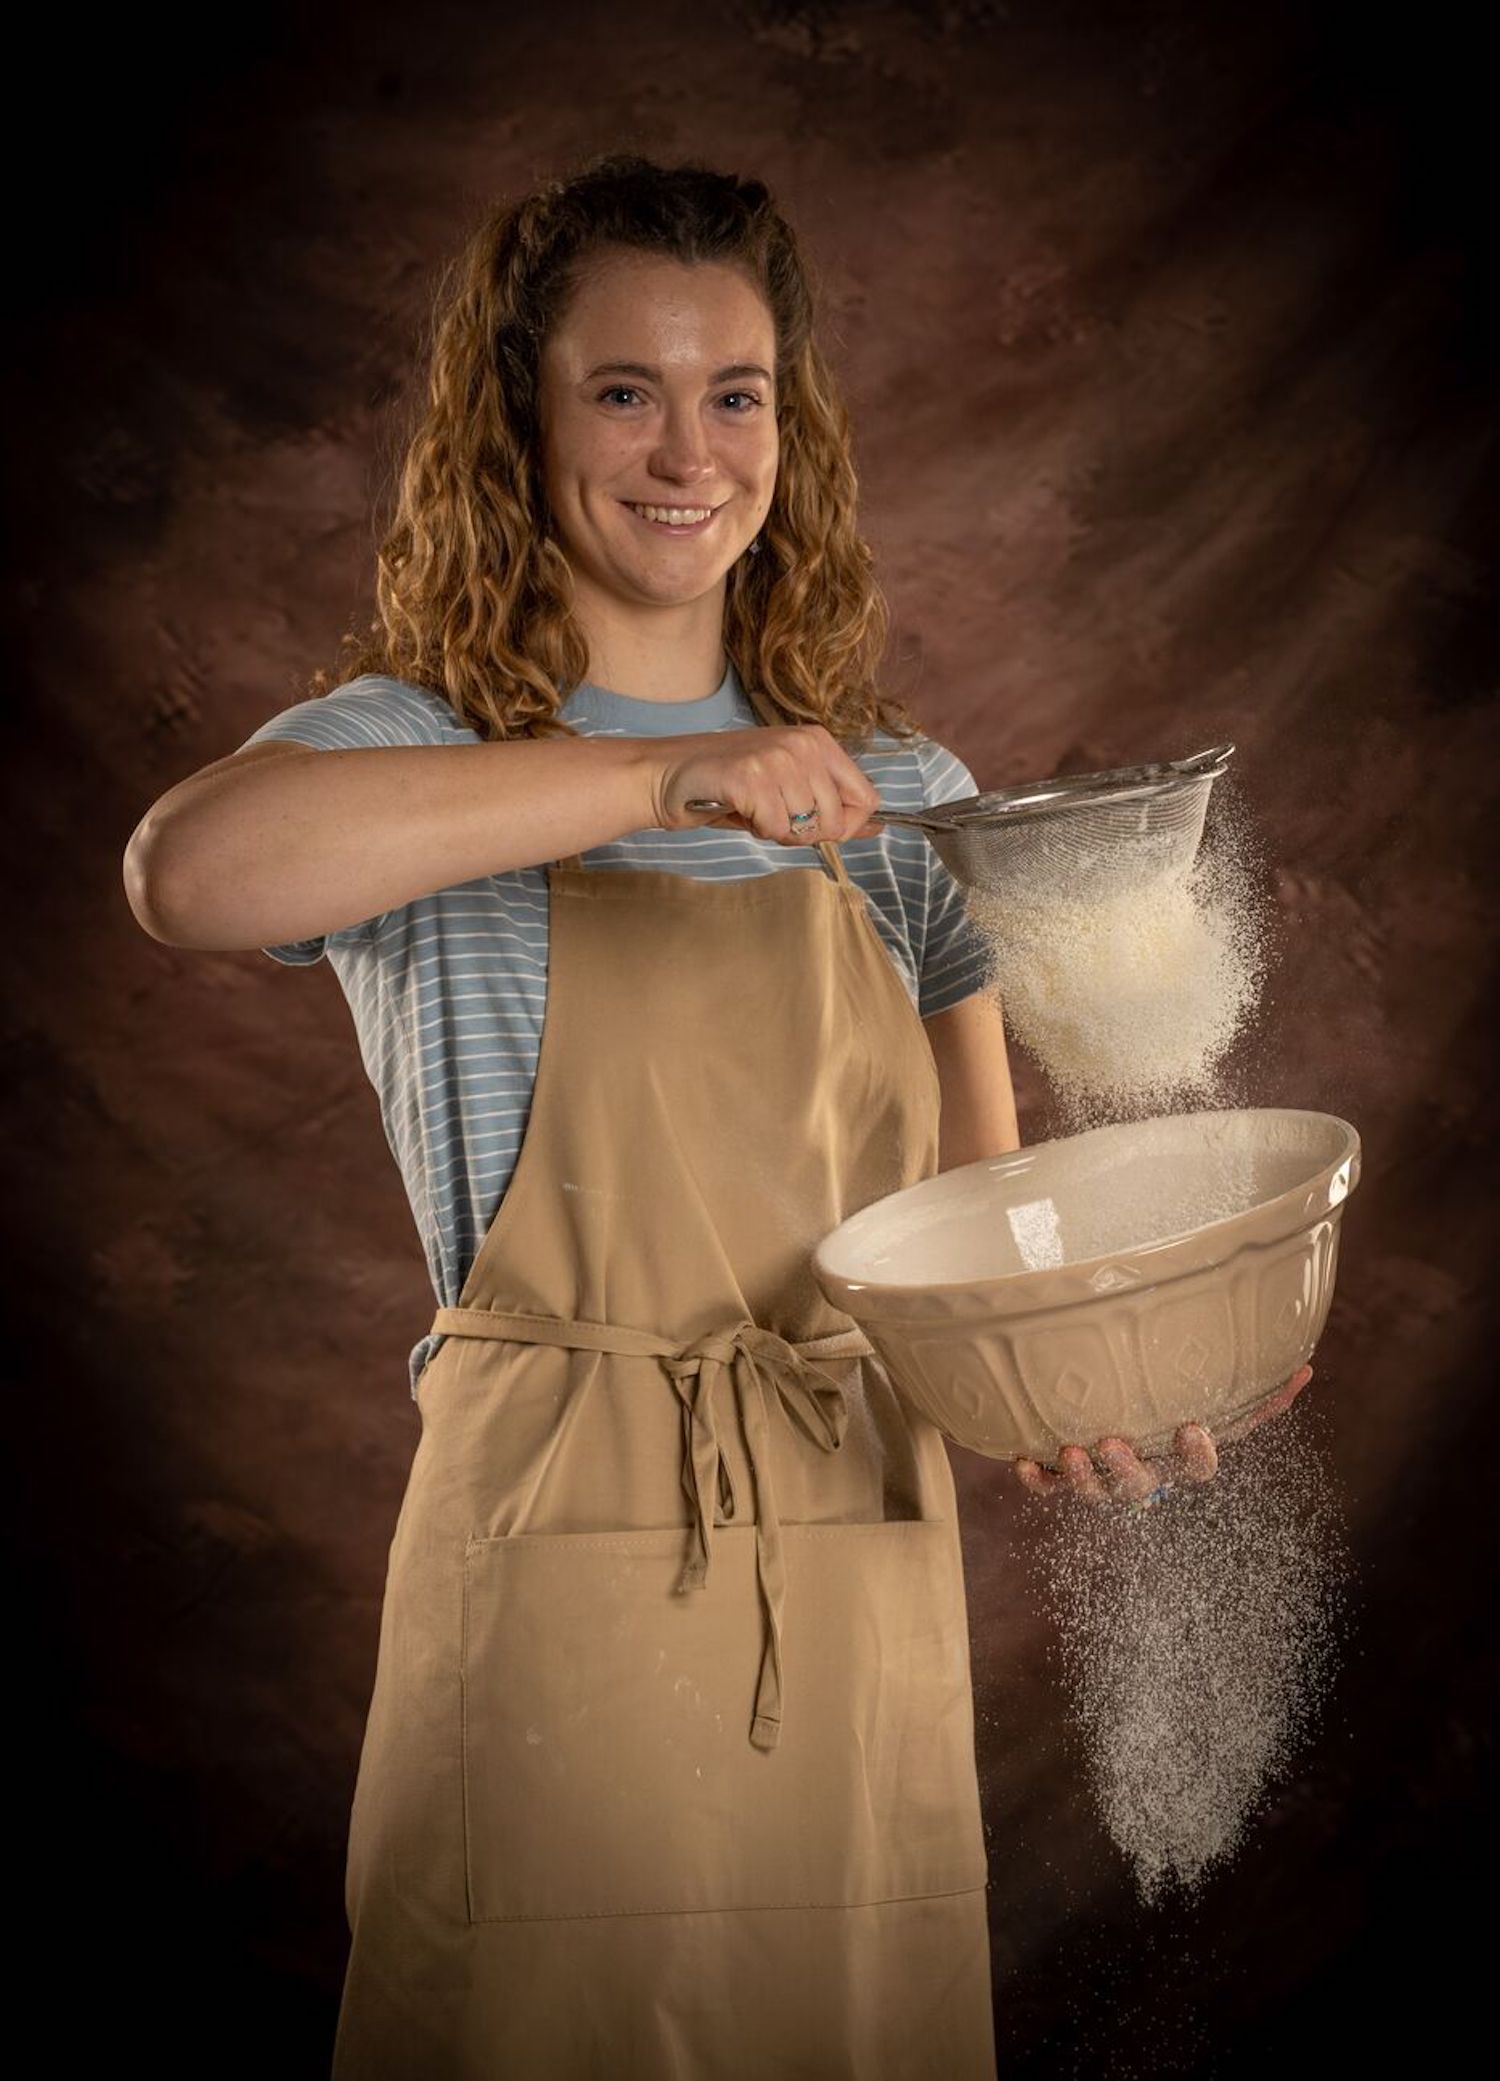 Meet the Bakers on Bake It 'Til You Make It, Bake It 'Til You Make It